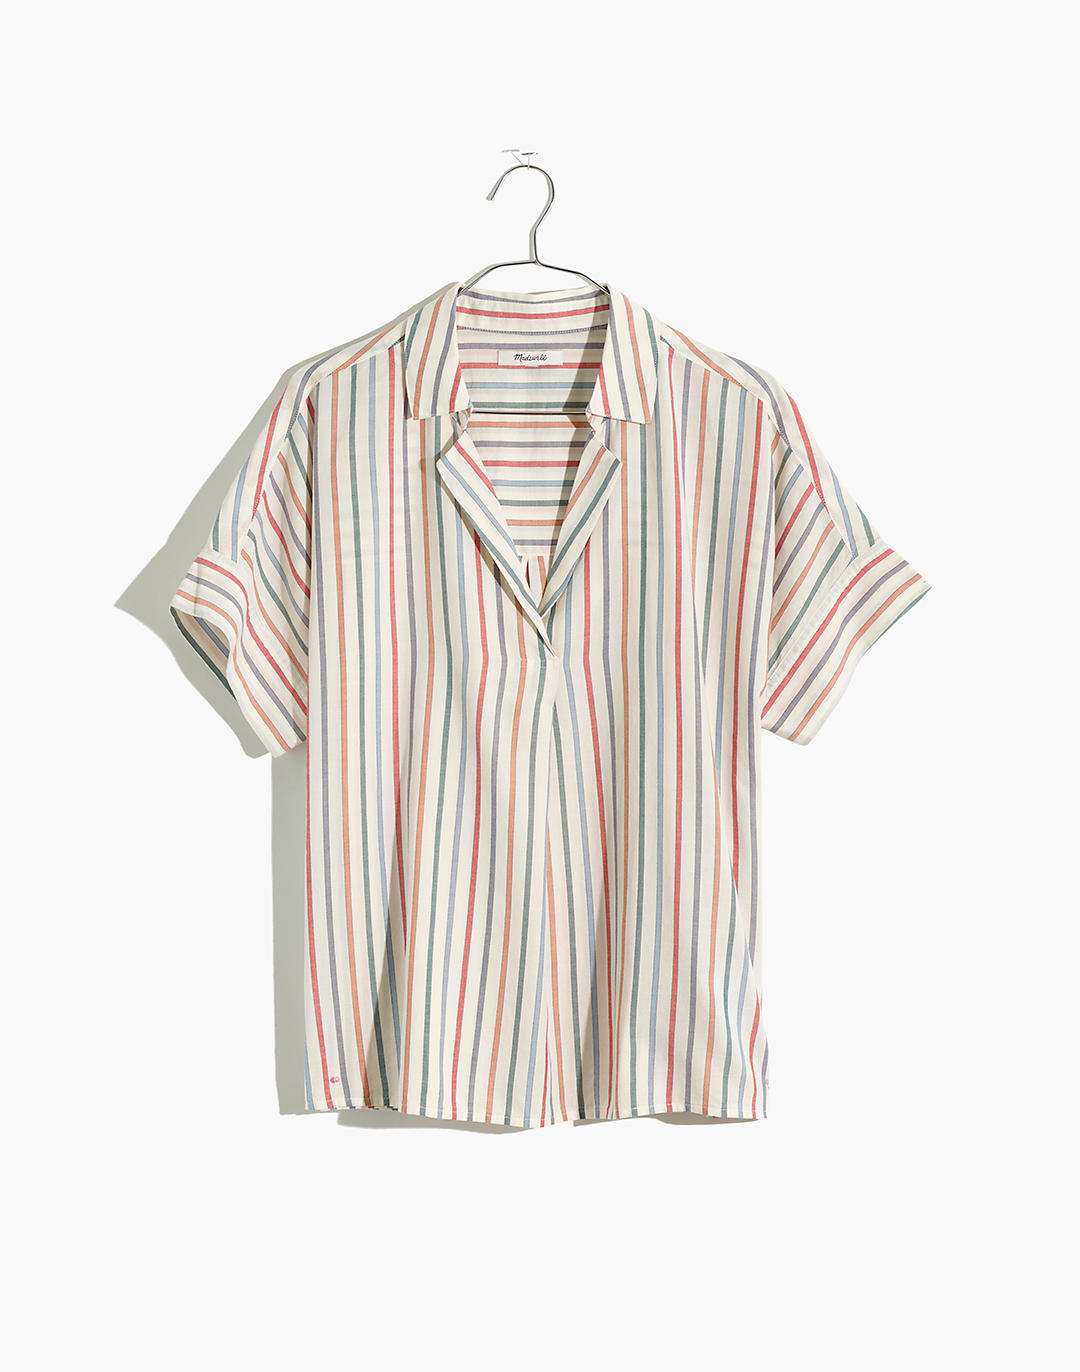 Women's Park Popover Shirt in Rainbow Stripe | Madewell